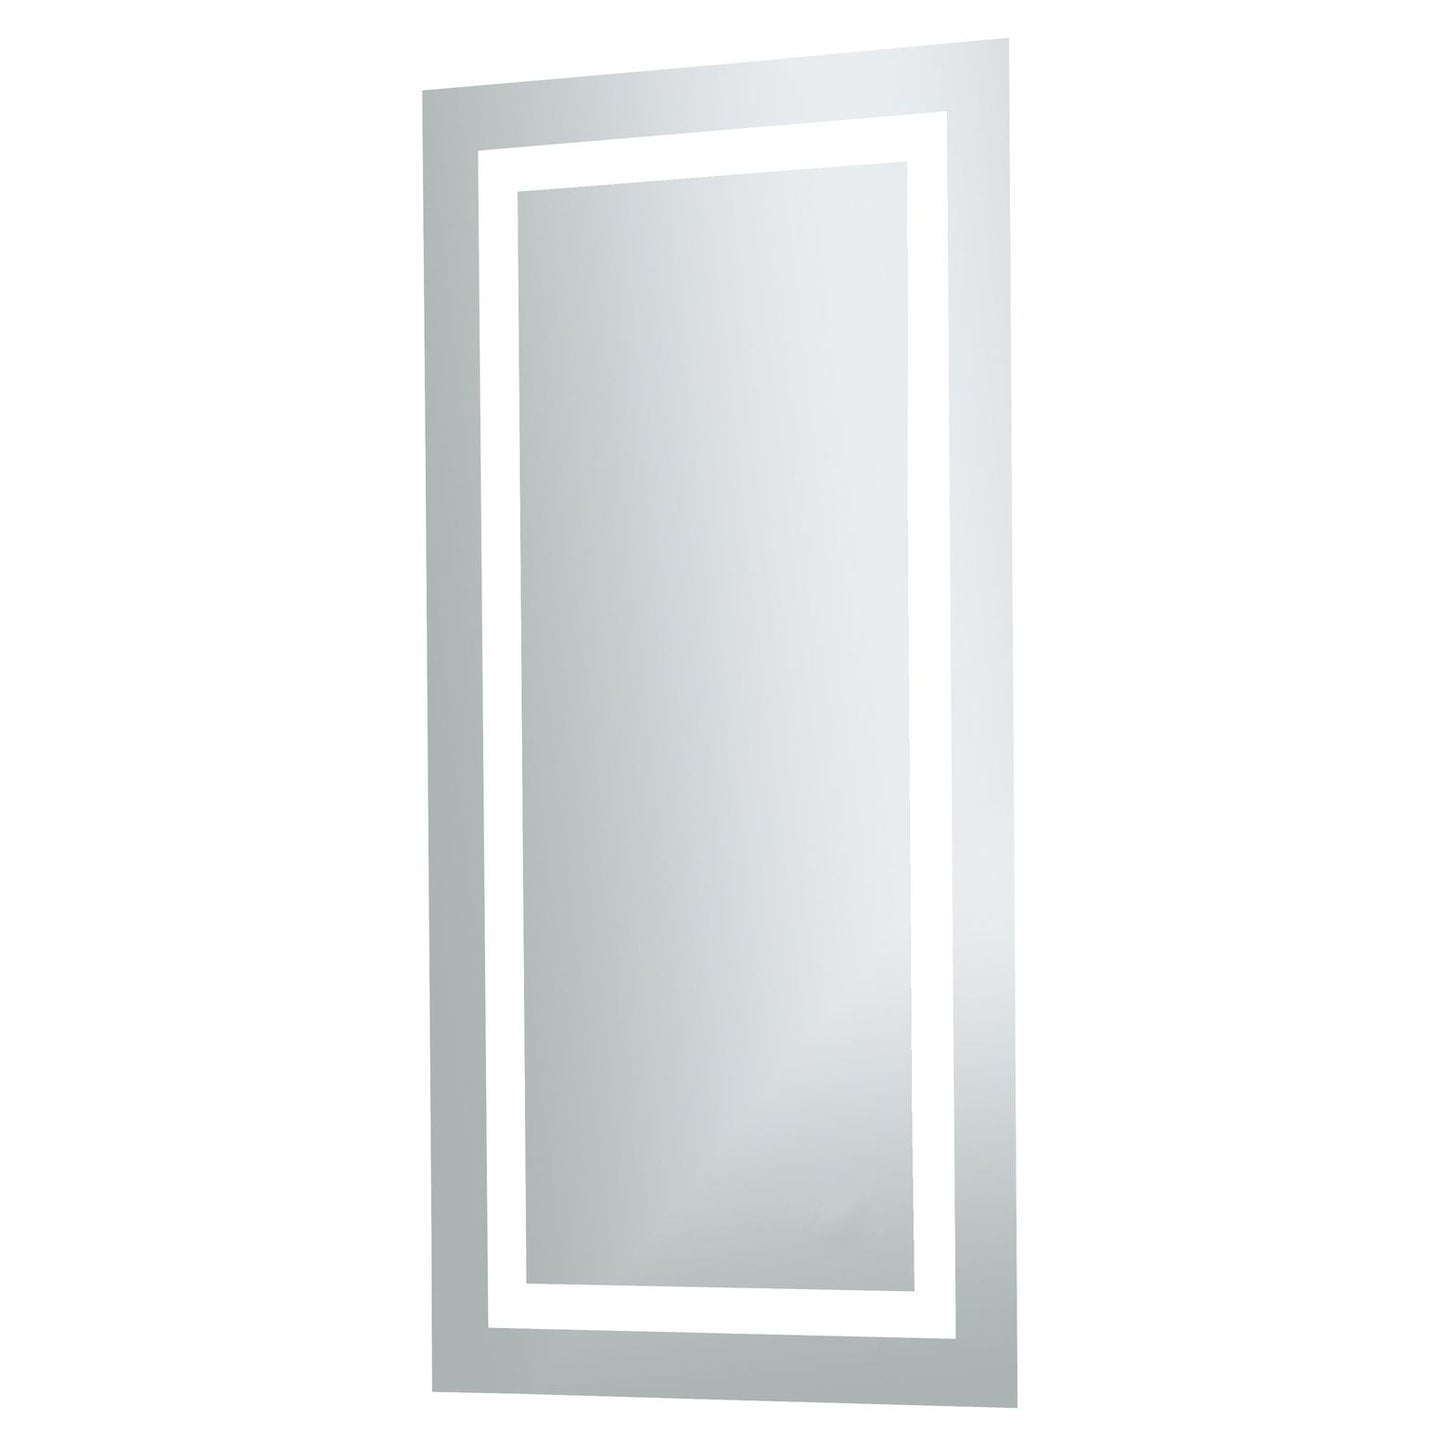 MRE-6002 Nova 20" x 40" LED Mirror in Glossy White - 5000K